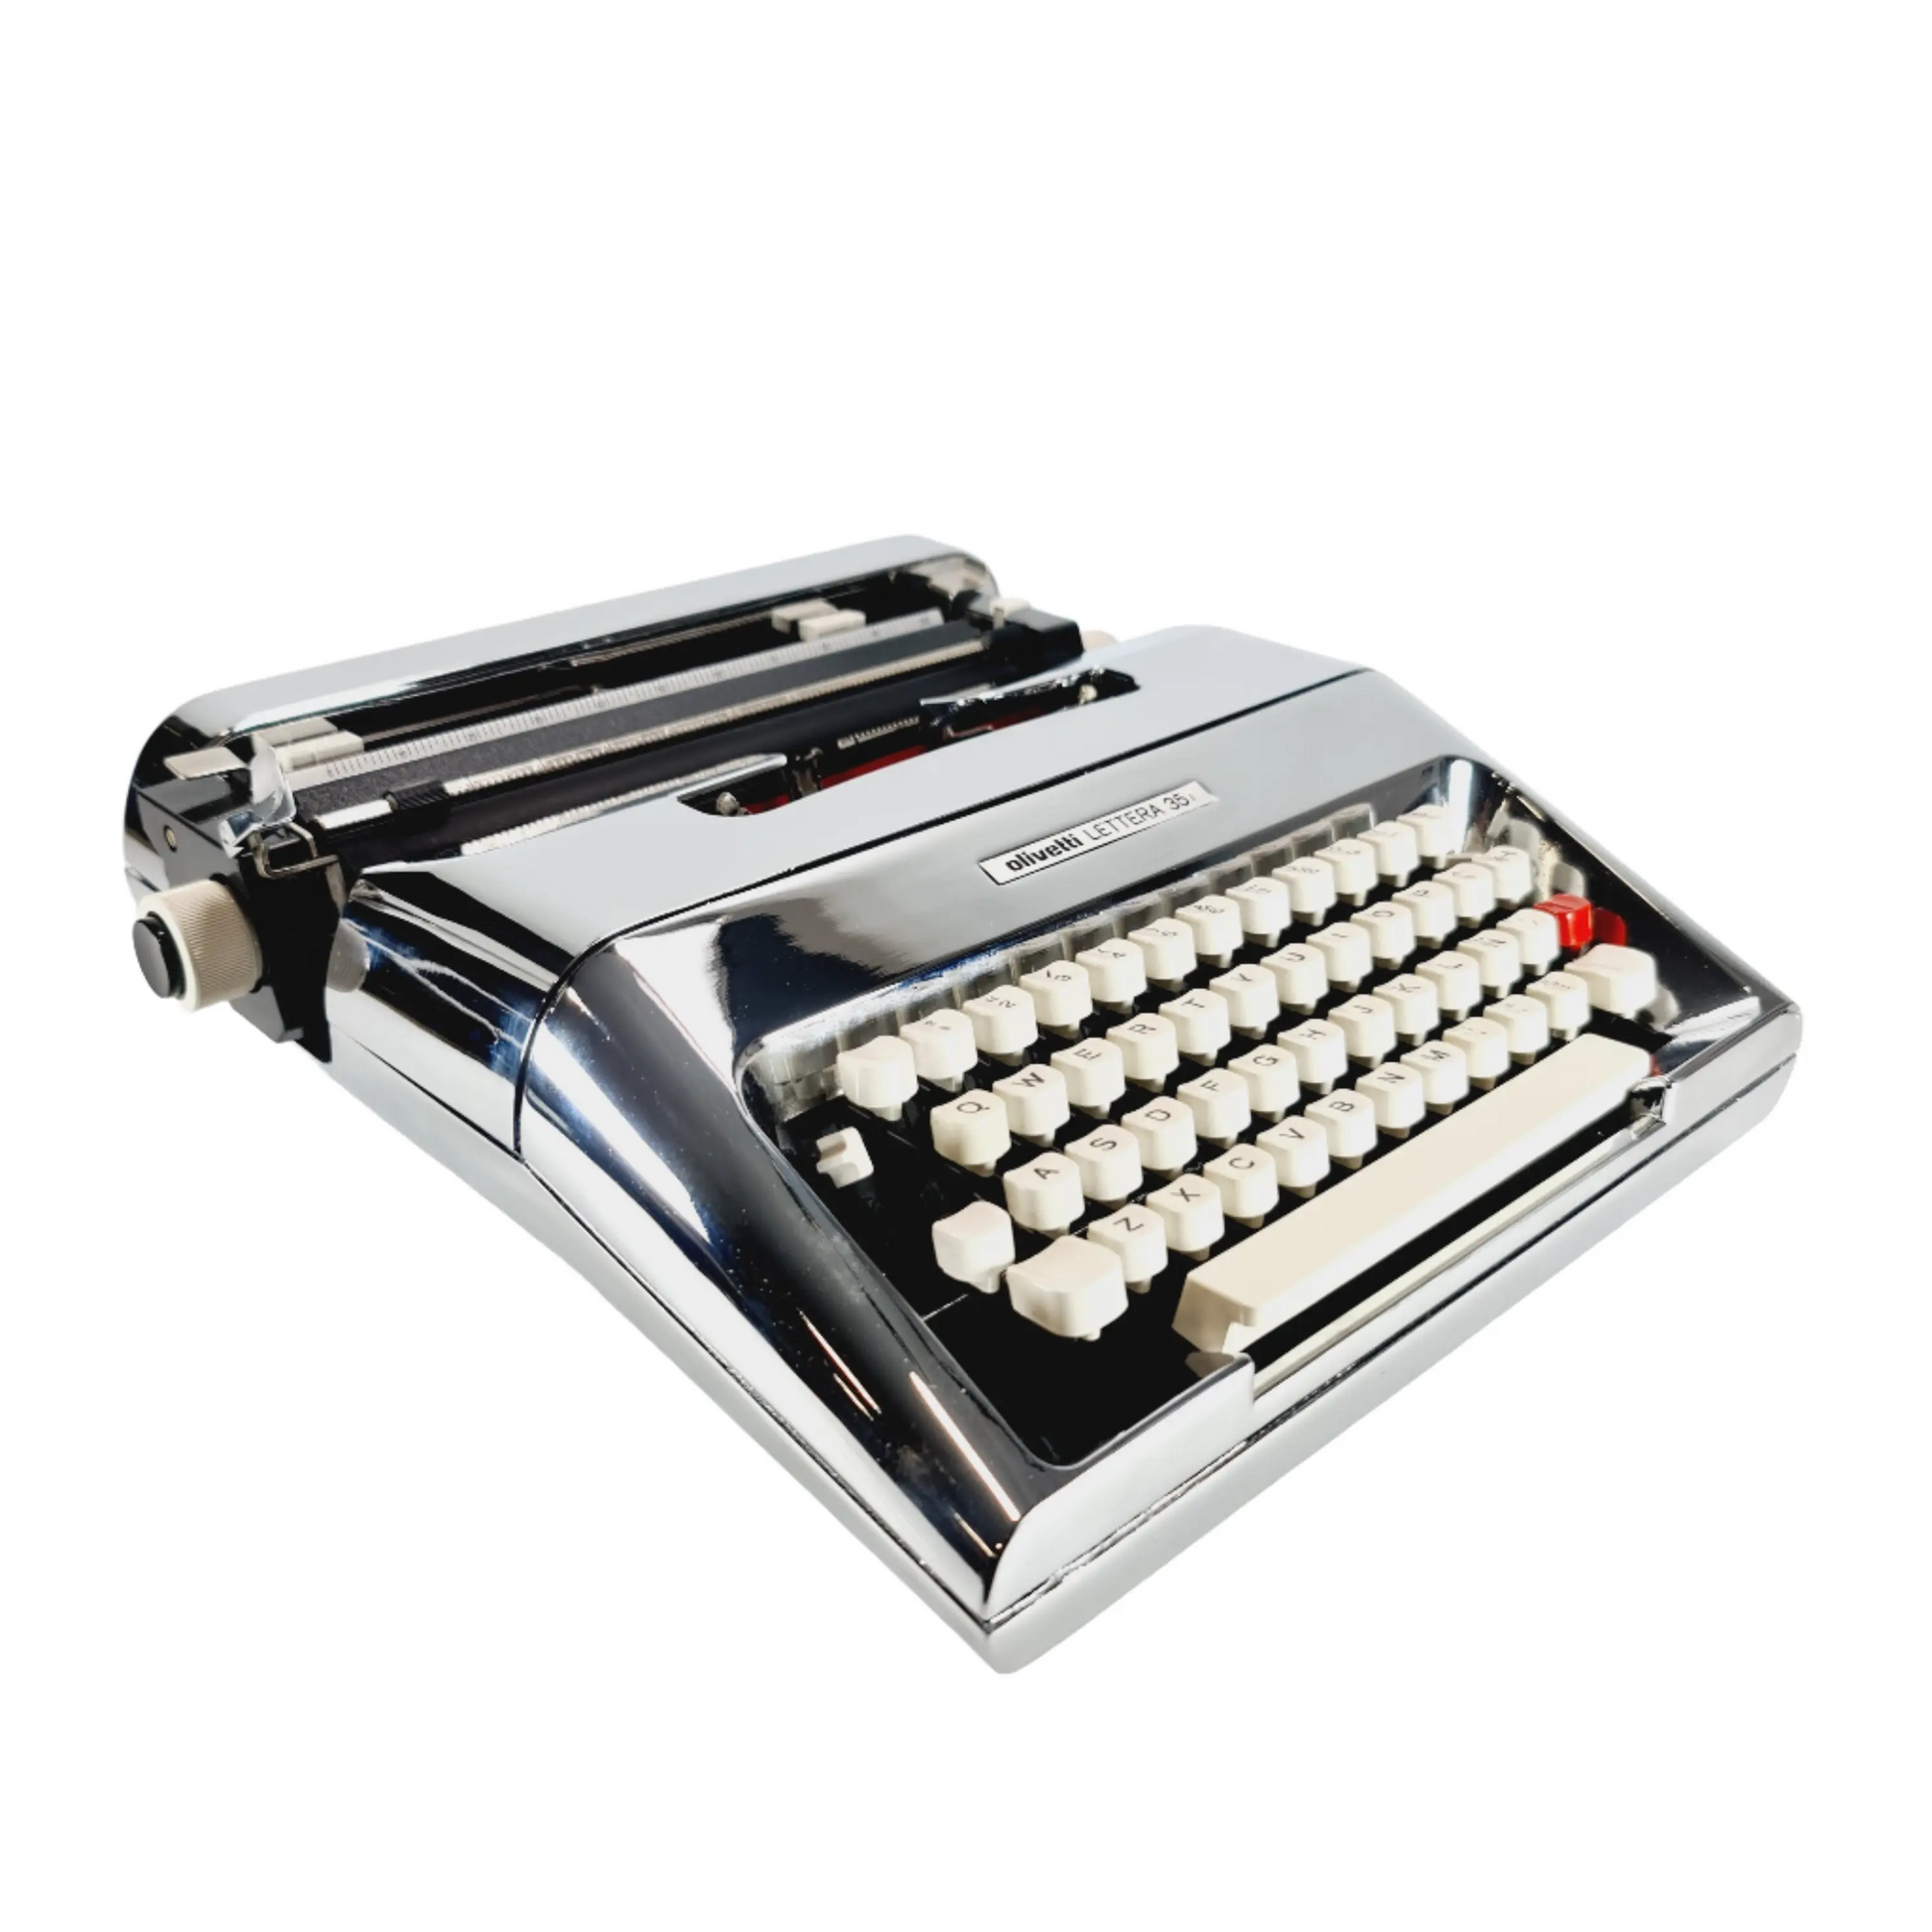 Limited Edition Olivetti Lettera 35 Typewriter (01of 50) chrome-plated - ElGranero Typewriter.Company